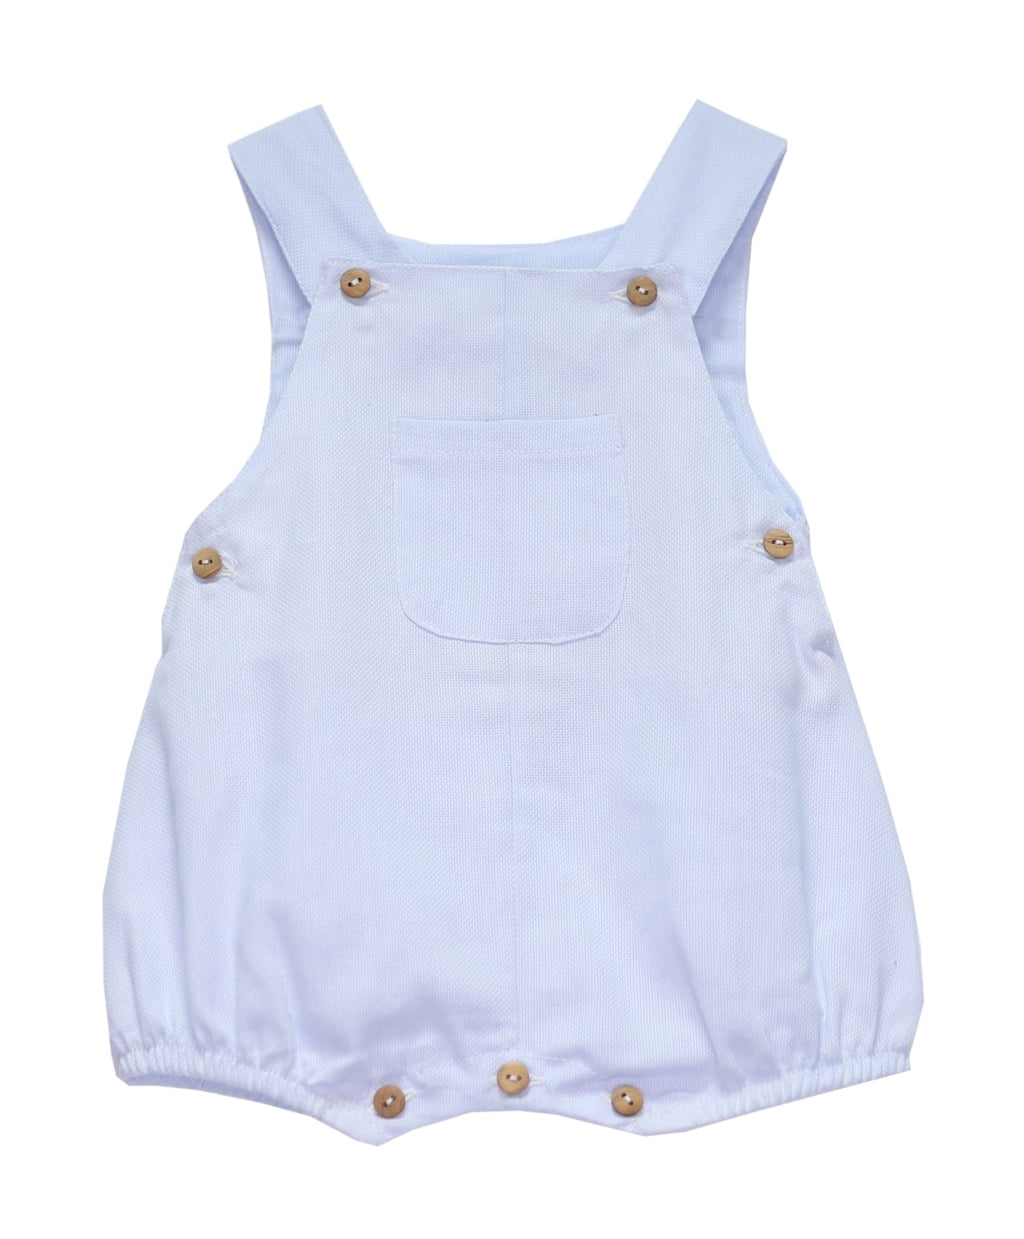 Basic-Blue Baby Boy Romper - Little Threads Inc. Children's Clothing